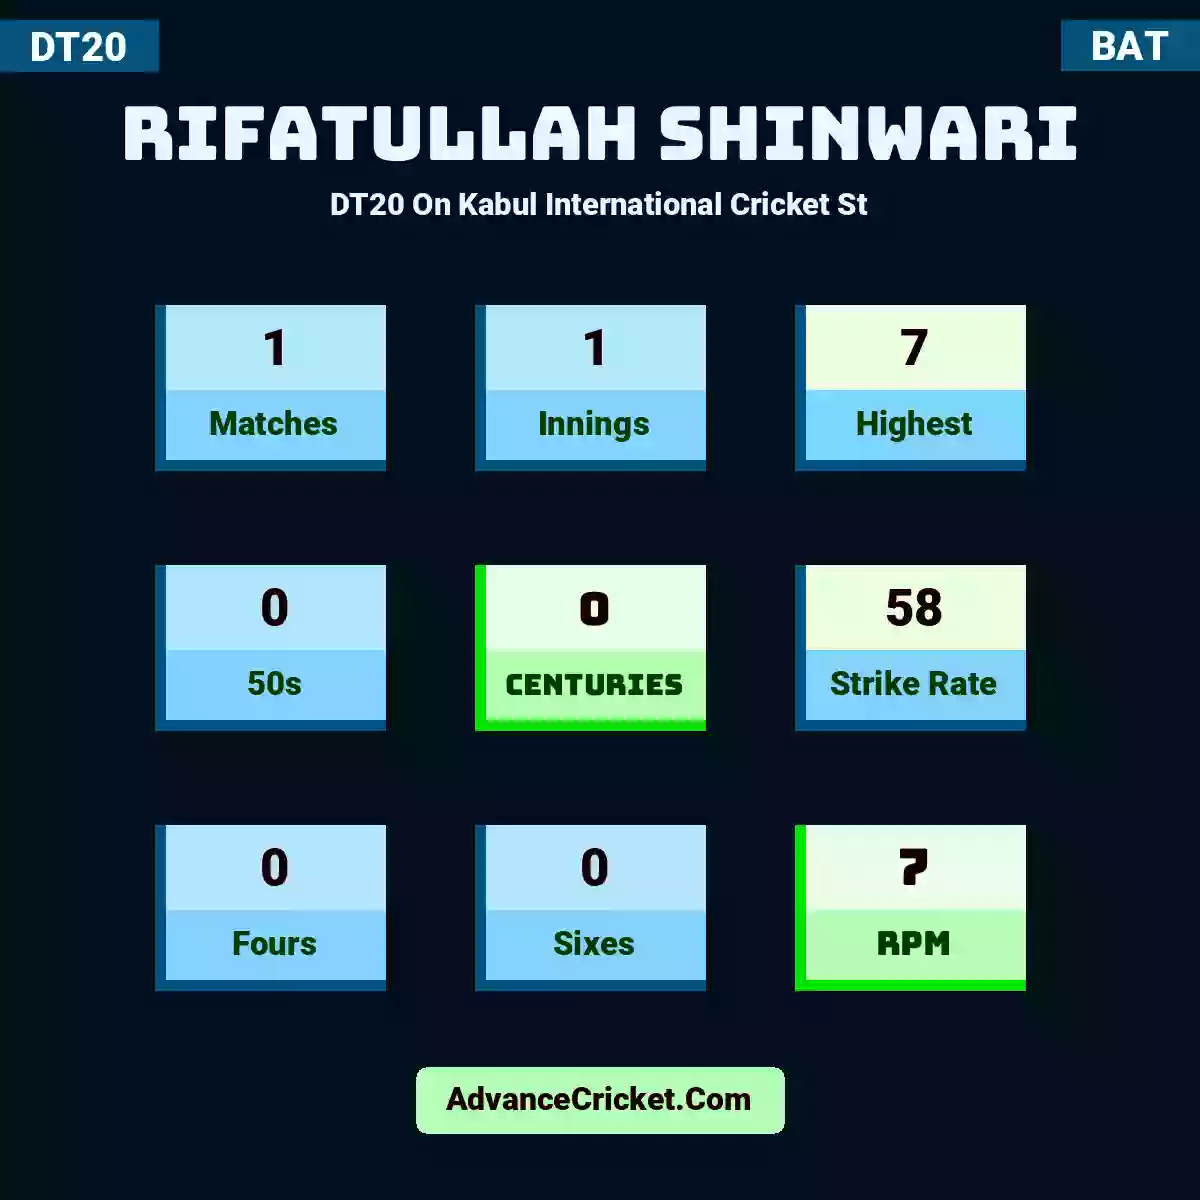 Rifatullah Shinwari DT20  On Kabul International Cricket St, Rifatullah Shinwari played 1 matches, scored 7 runs as highest, 0 half-centuries, and 0 centuries, with a strike rate of 58. R.Shinwari hit 0 fours and 0 sixes, with an RPM of 7.